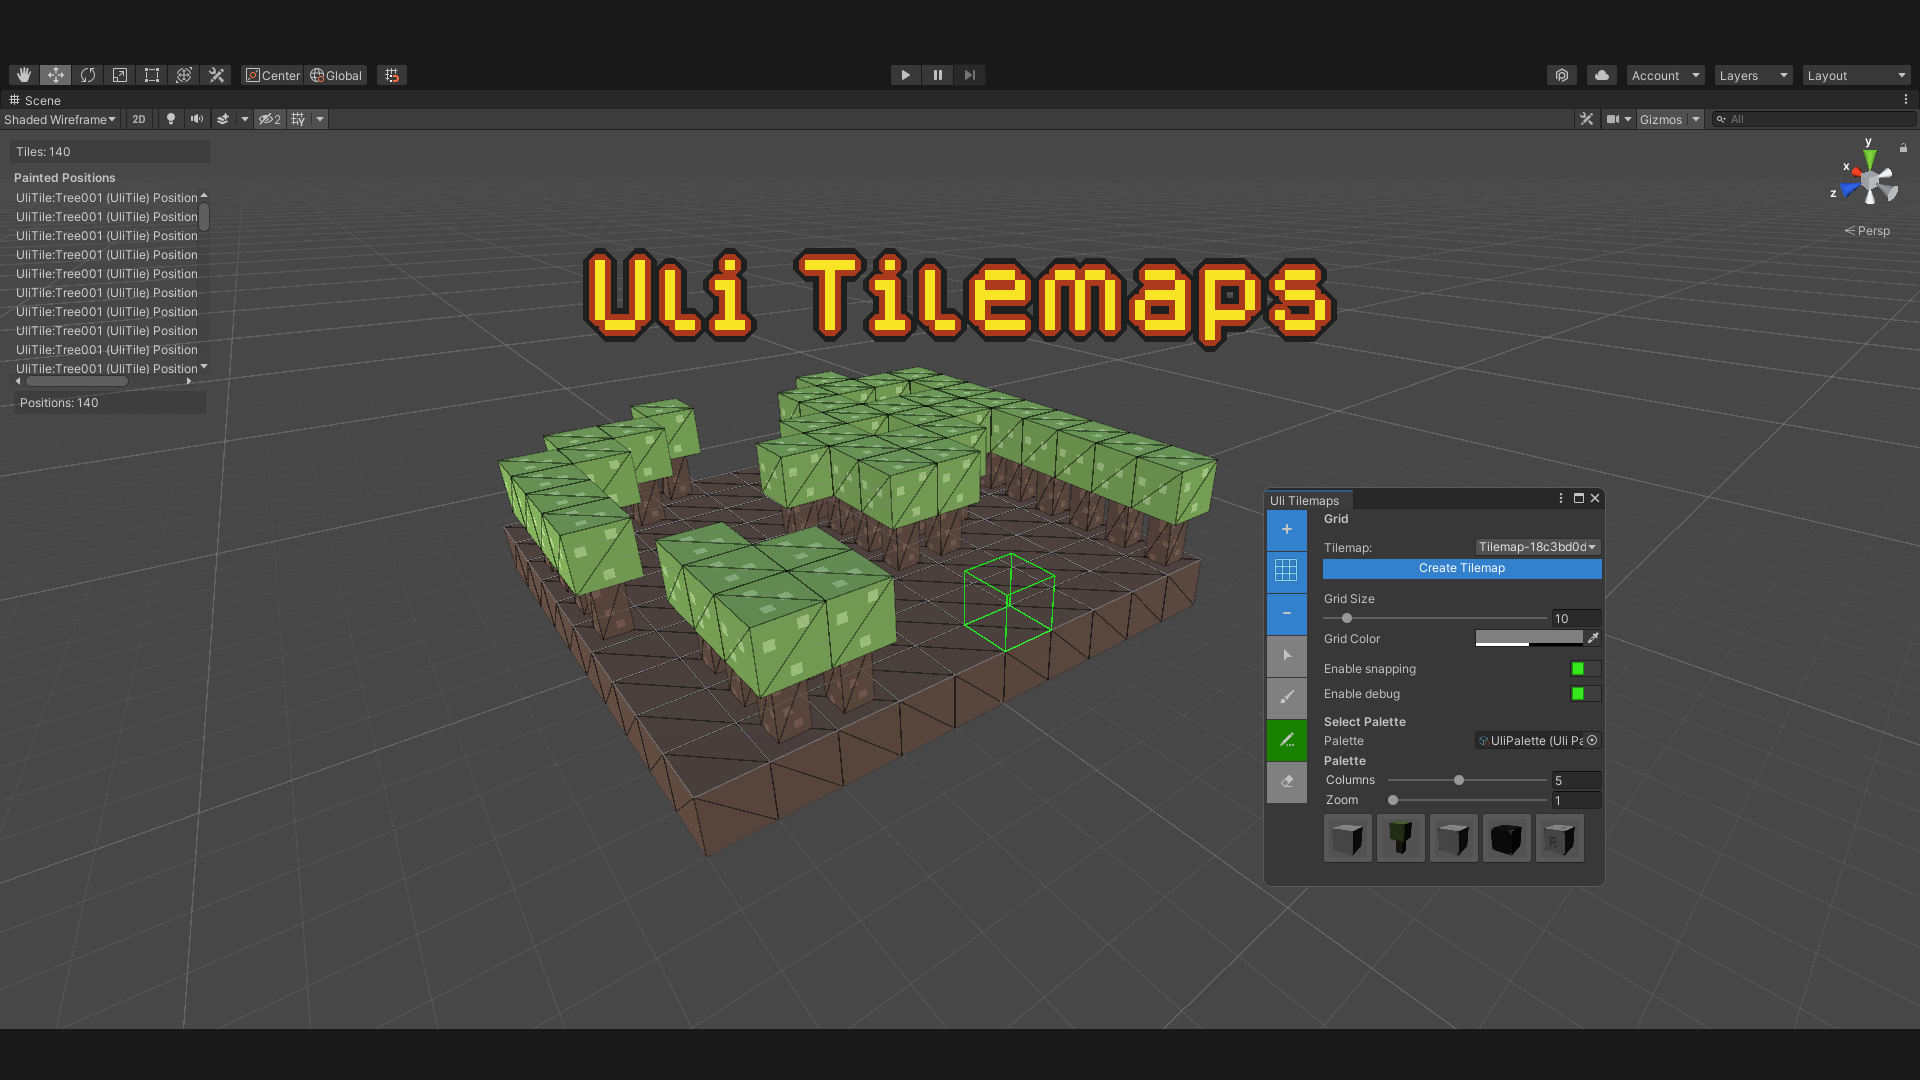 Uli Tilemaps for Unity 2020.3.24f1+